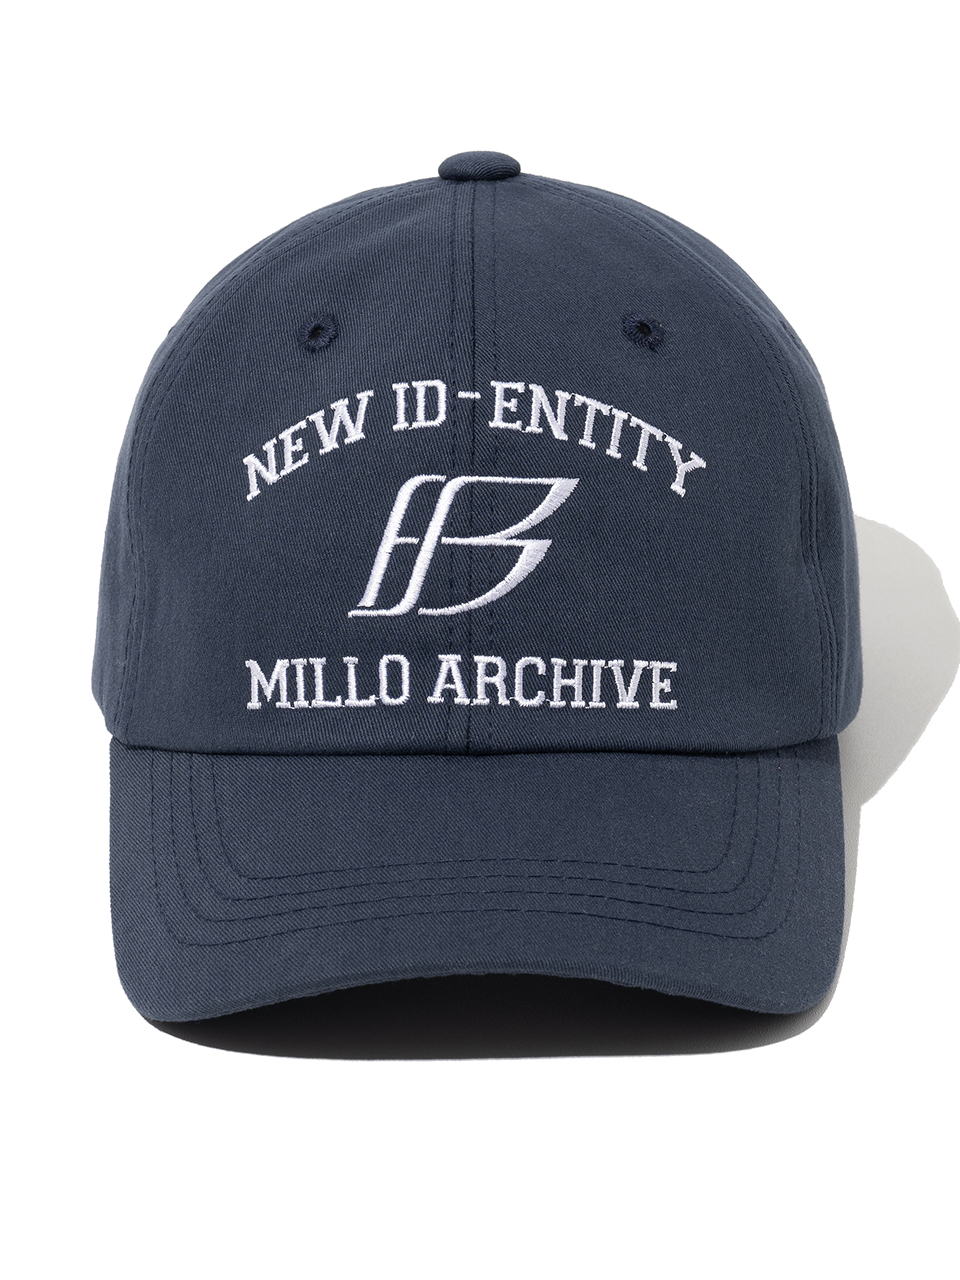 New Id-entity Ball Cap - Navy